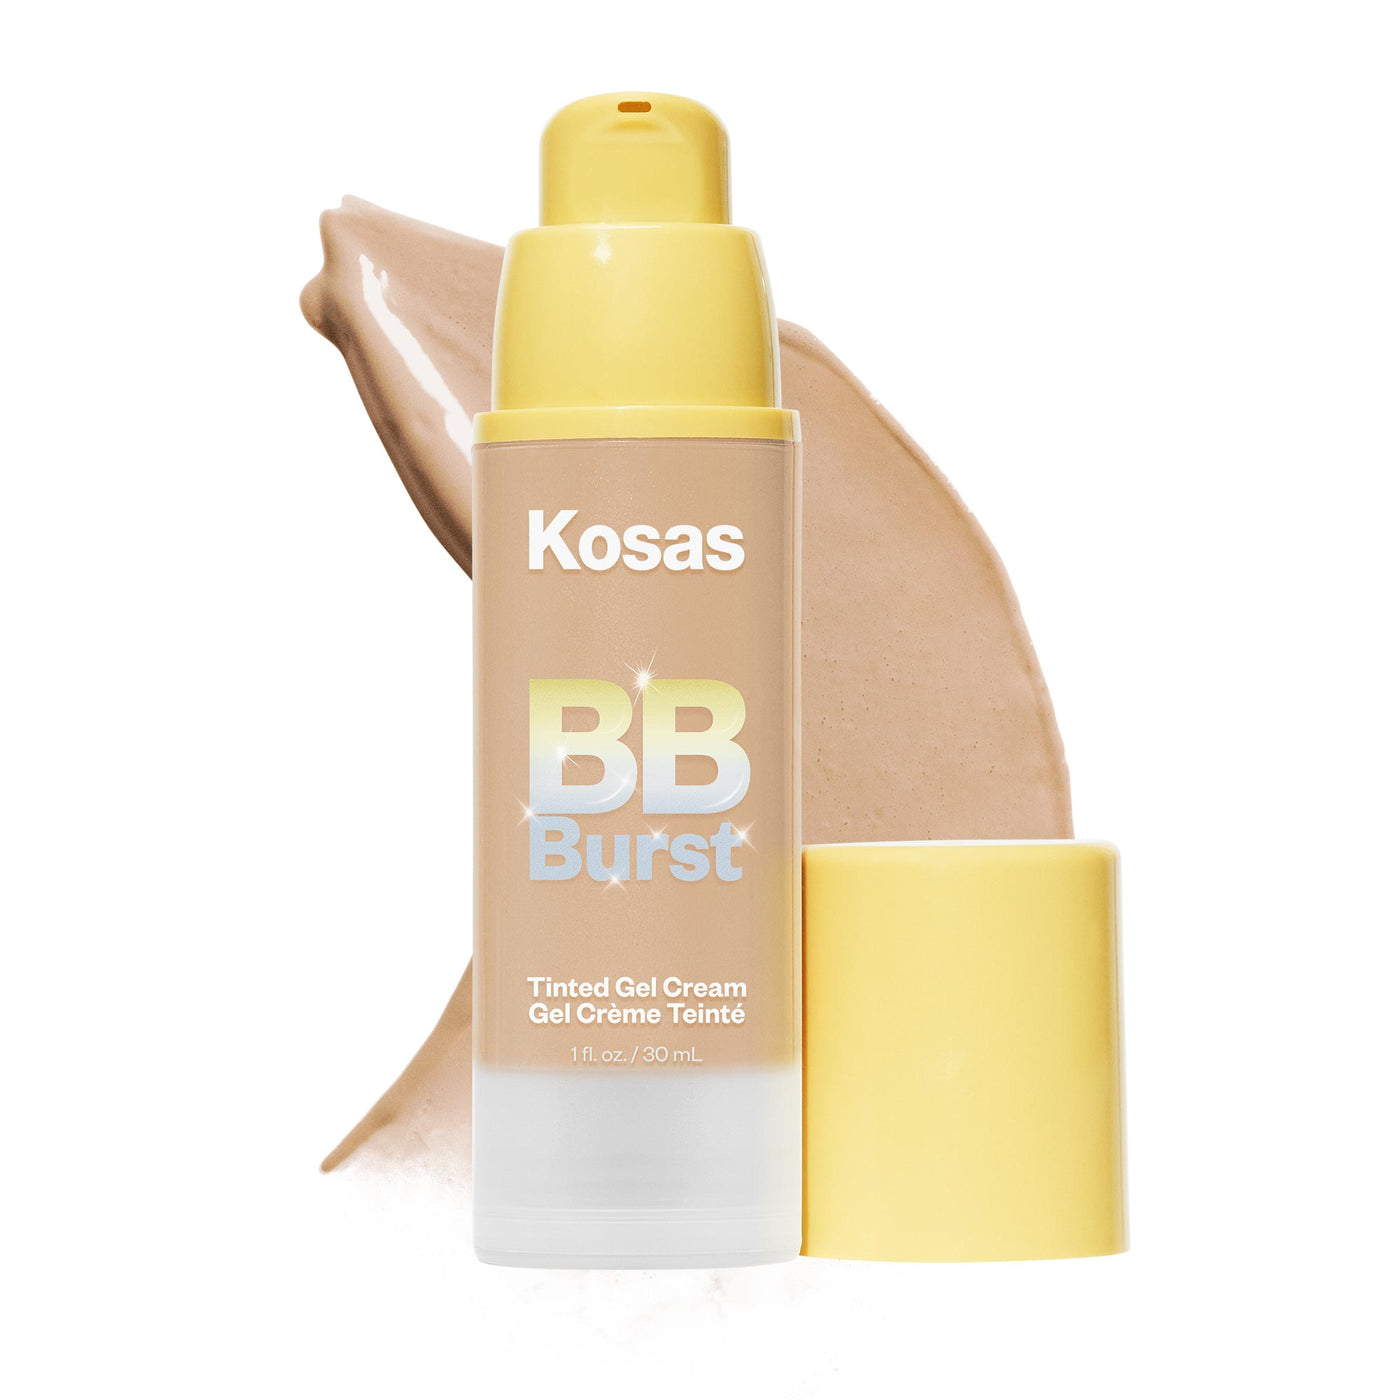 Kosas BB Burst Tinted Gel Cream 24